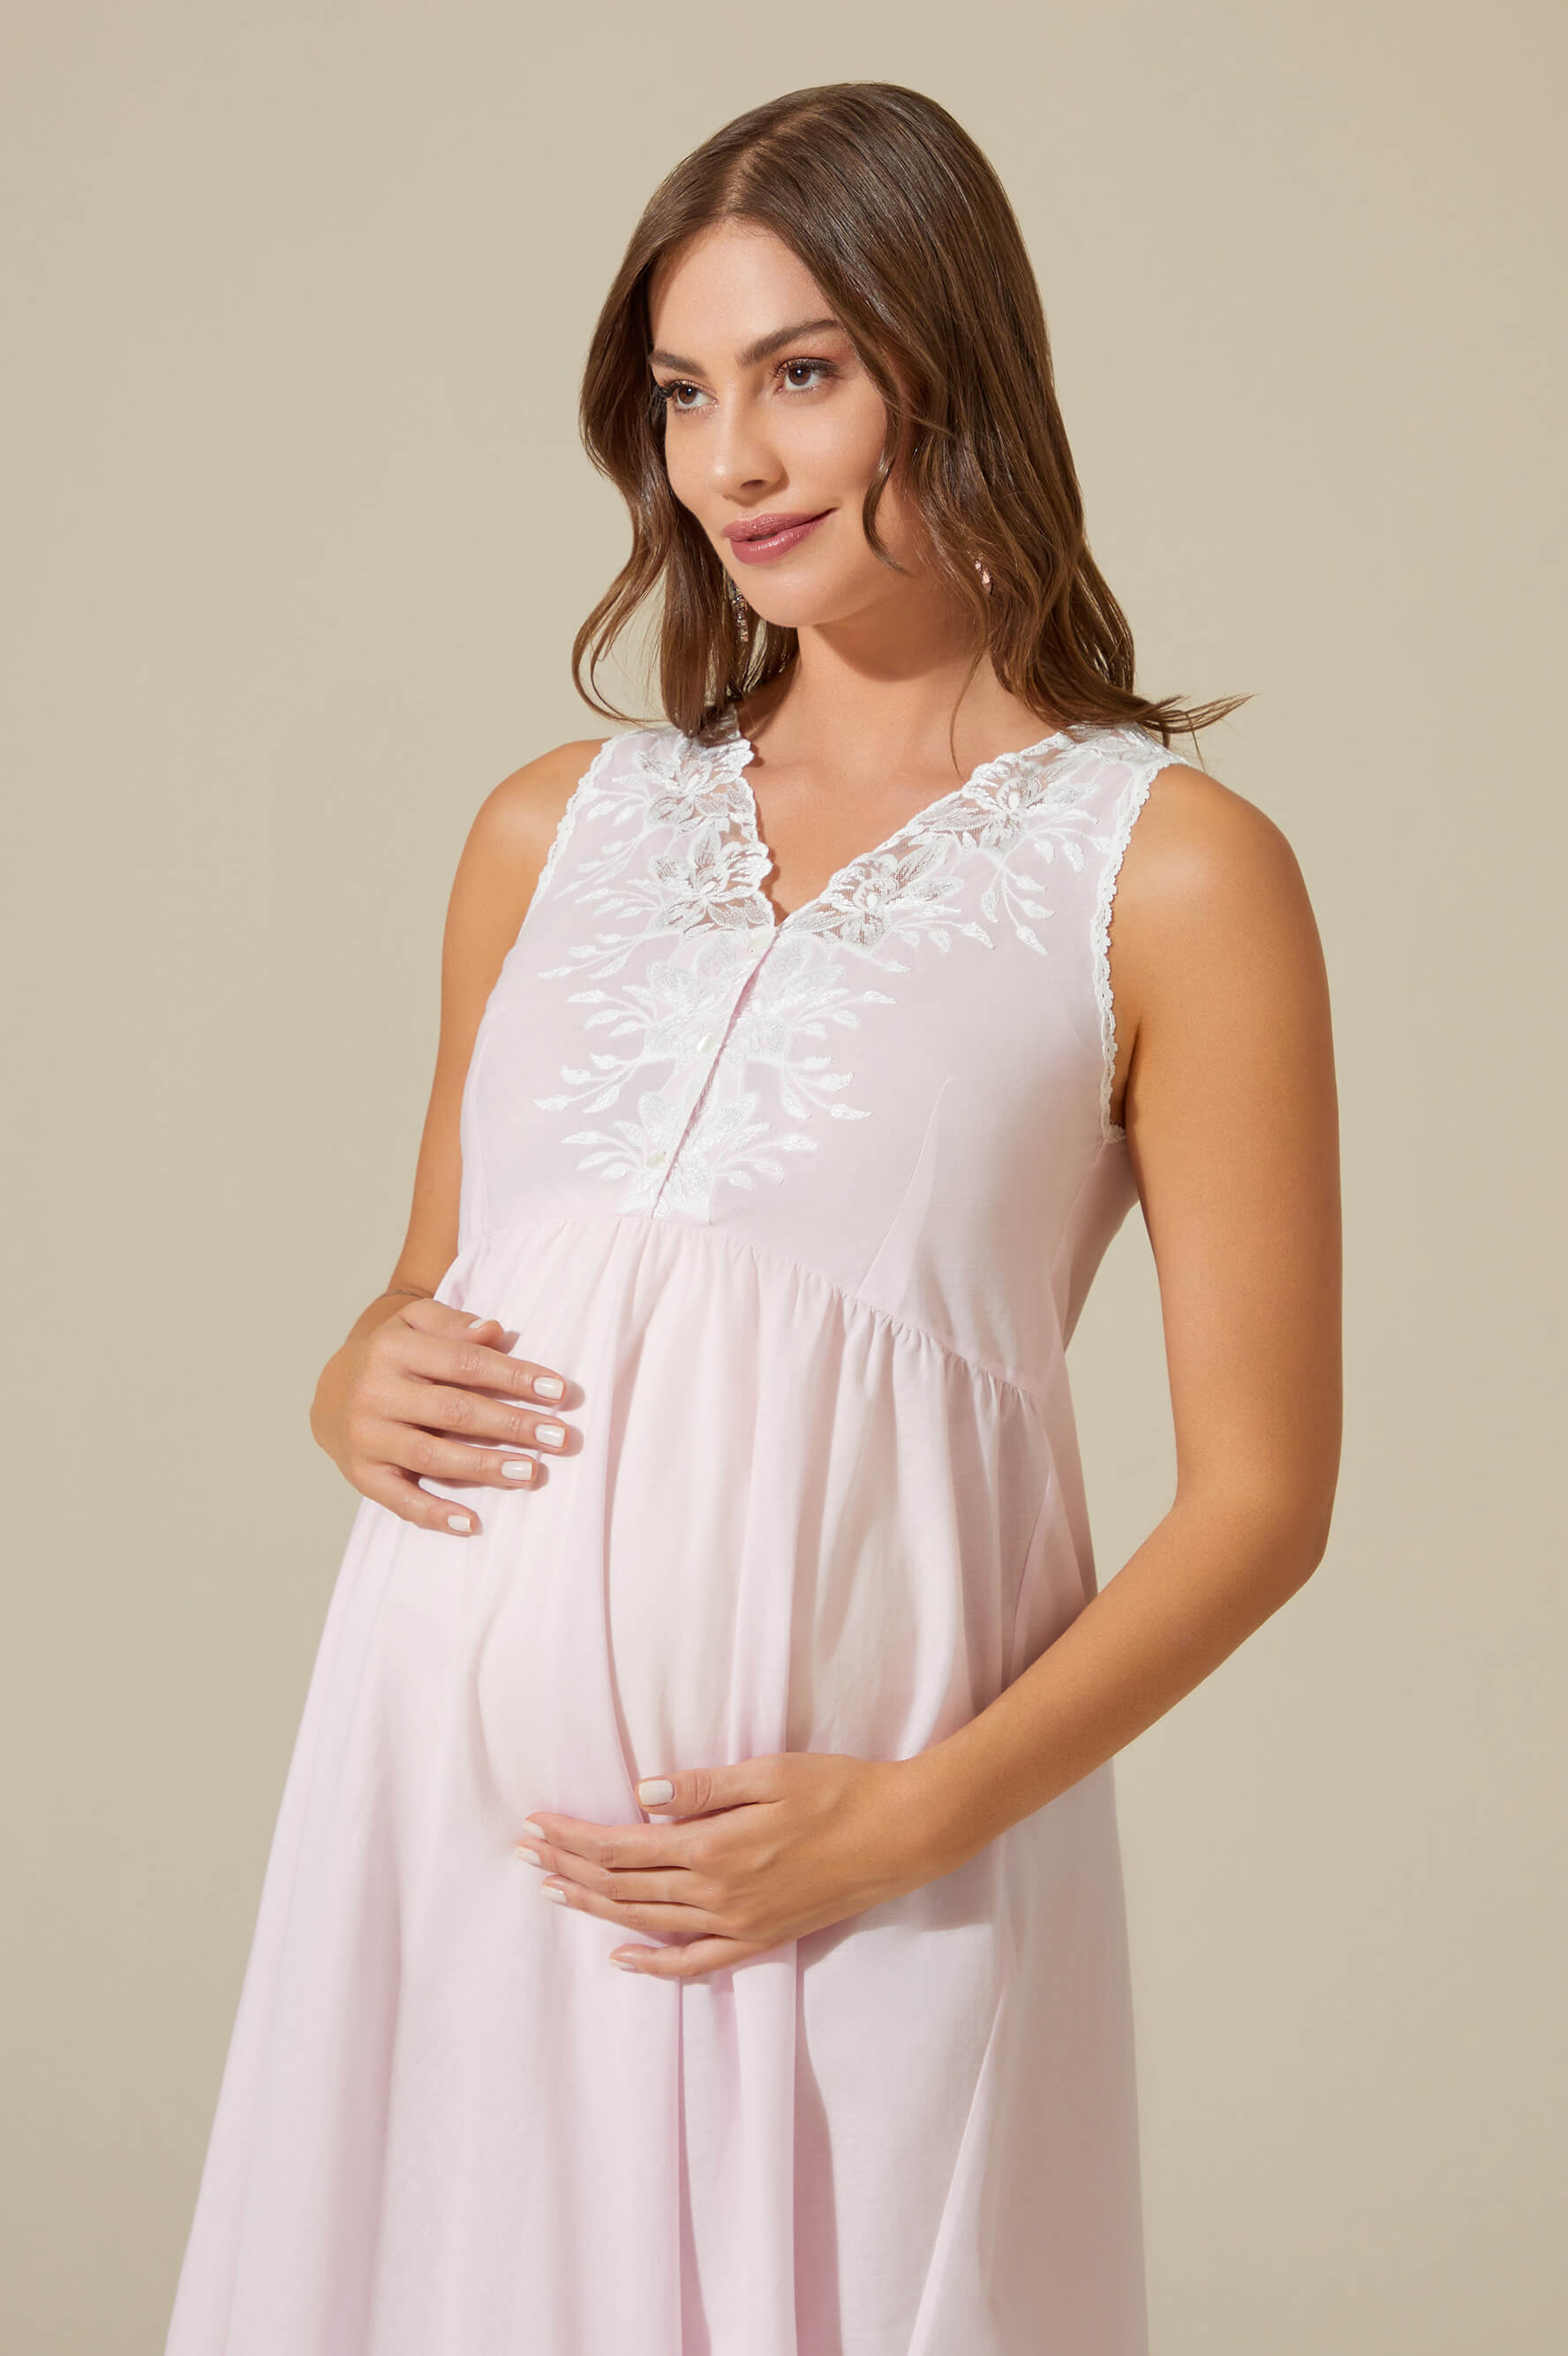 Birthing Gown and Nursing Nightdress rose order online | Mamarella